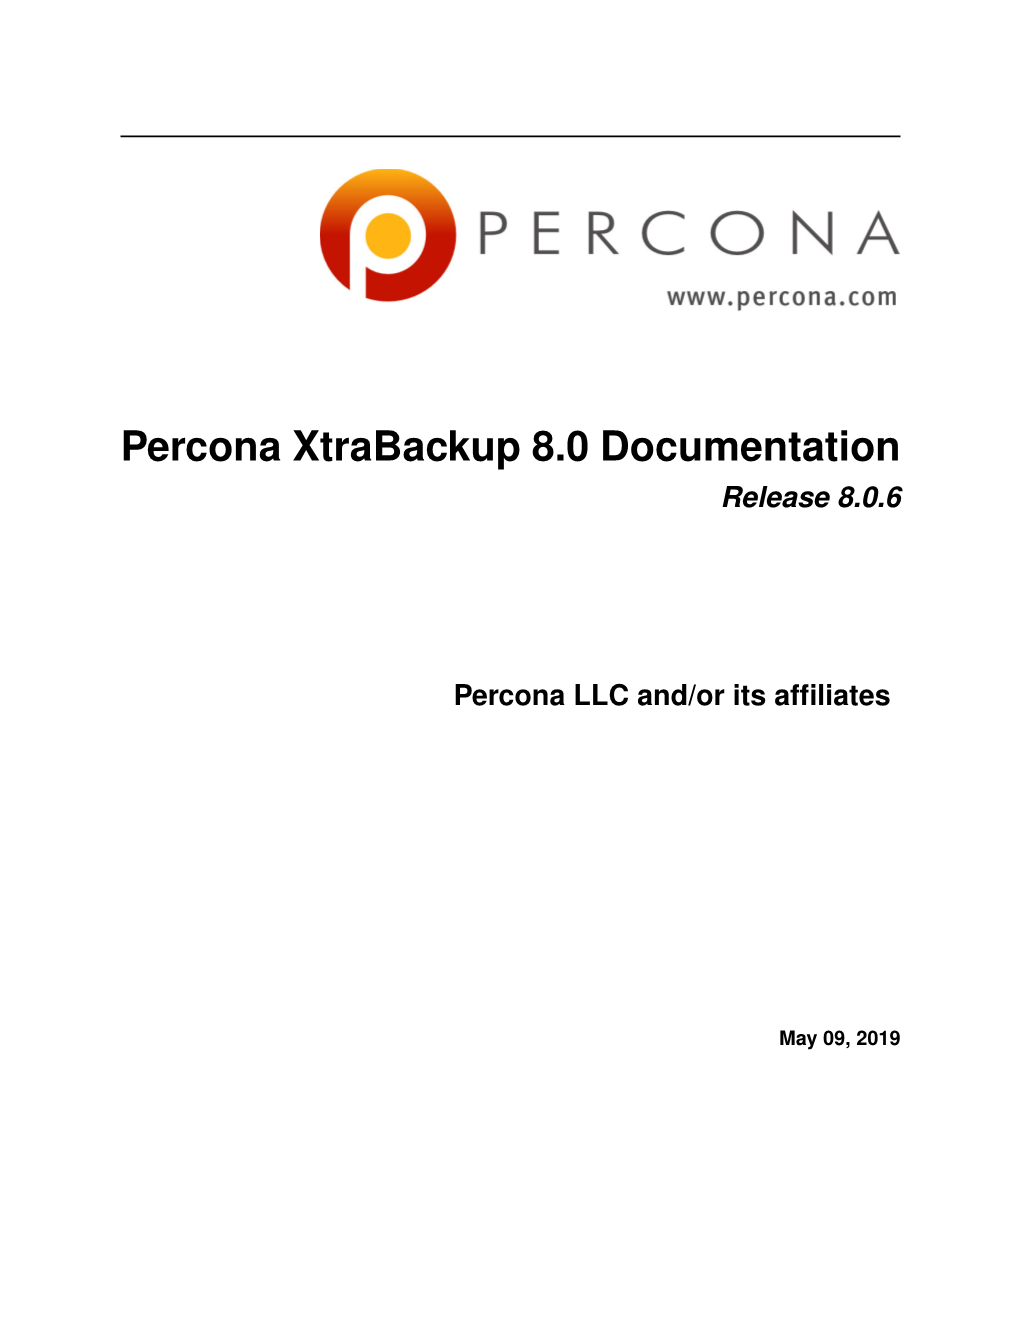 Percona Xtrabackup 8.0 Documentation Release 8.0.6